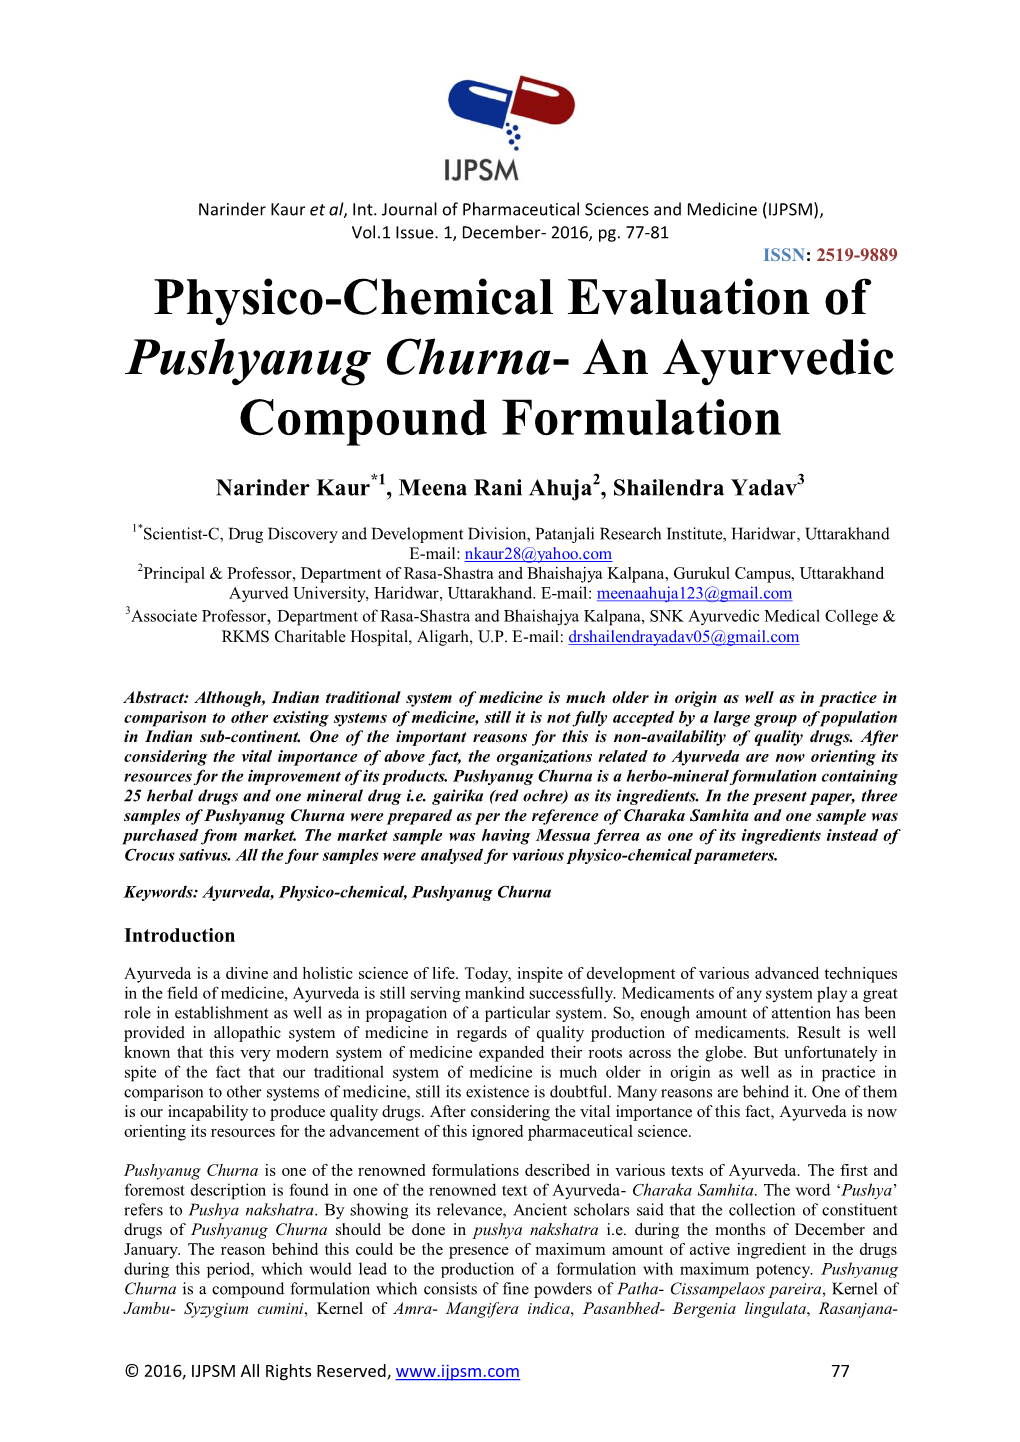 Physico-Chemical Evaluation of Pushyanug Churna- an Ayurvedic Compound Formulation